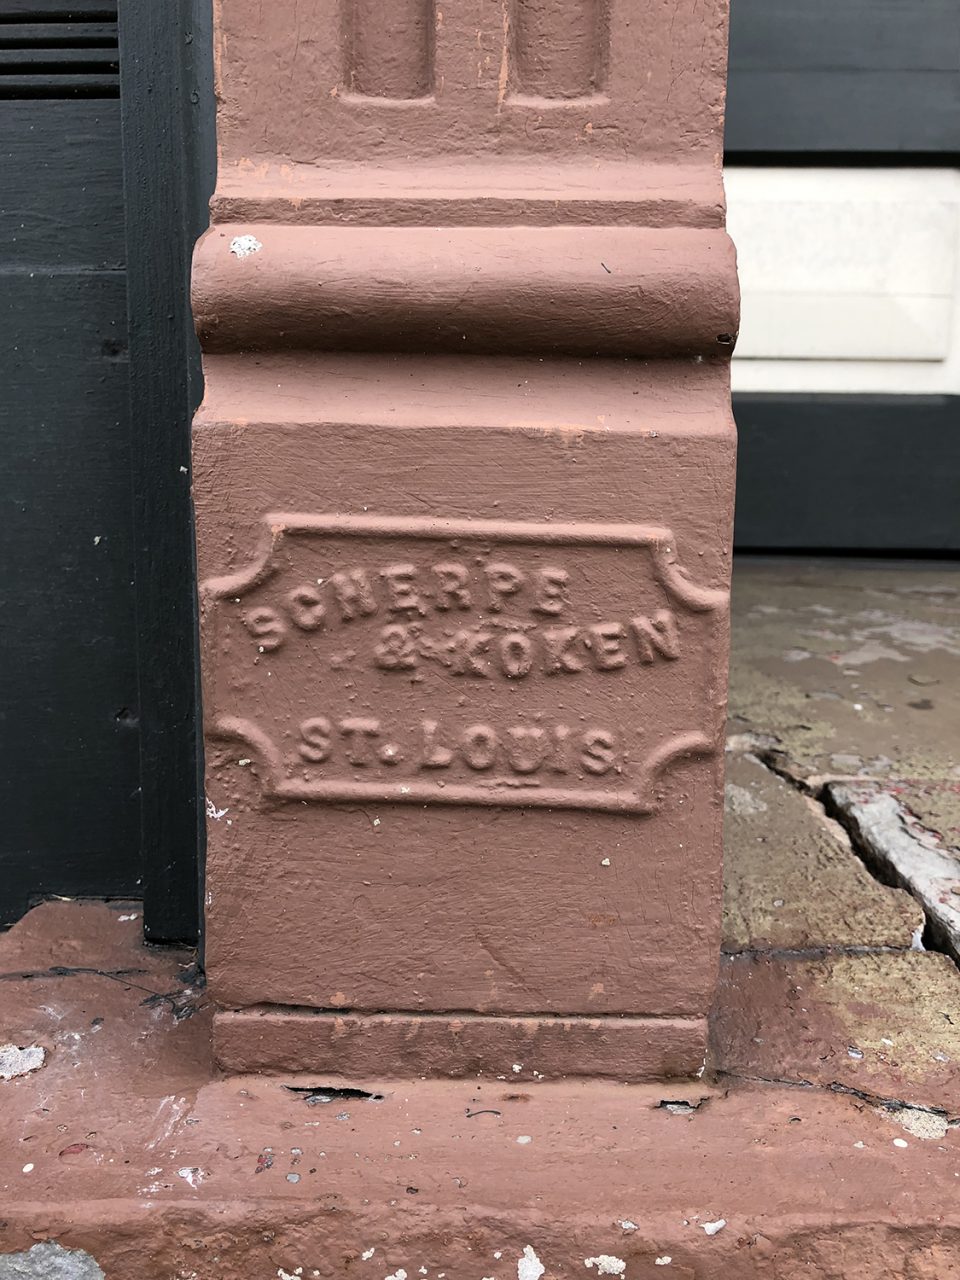 Iron work column bearing the name of Scherpe & Koken, made in St. Louis, found in Alabama.